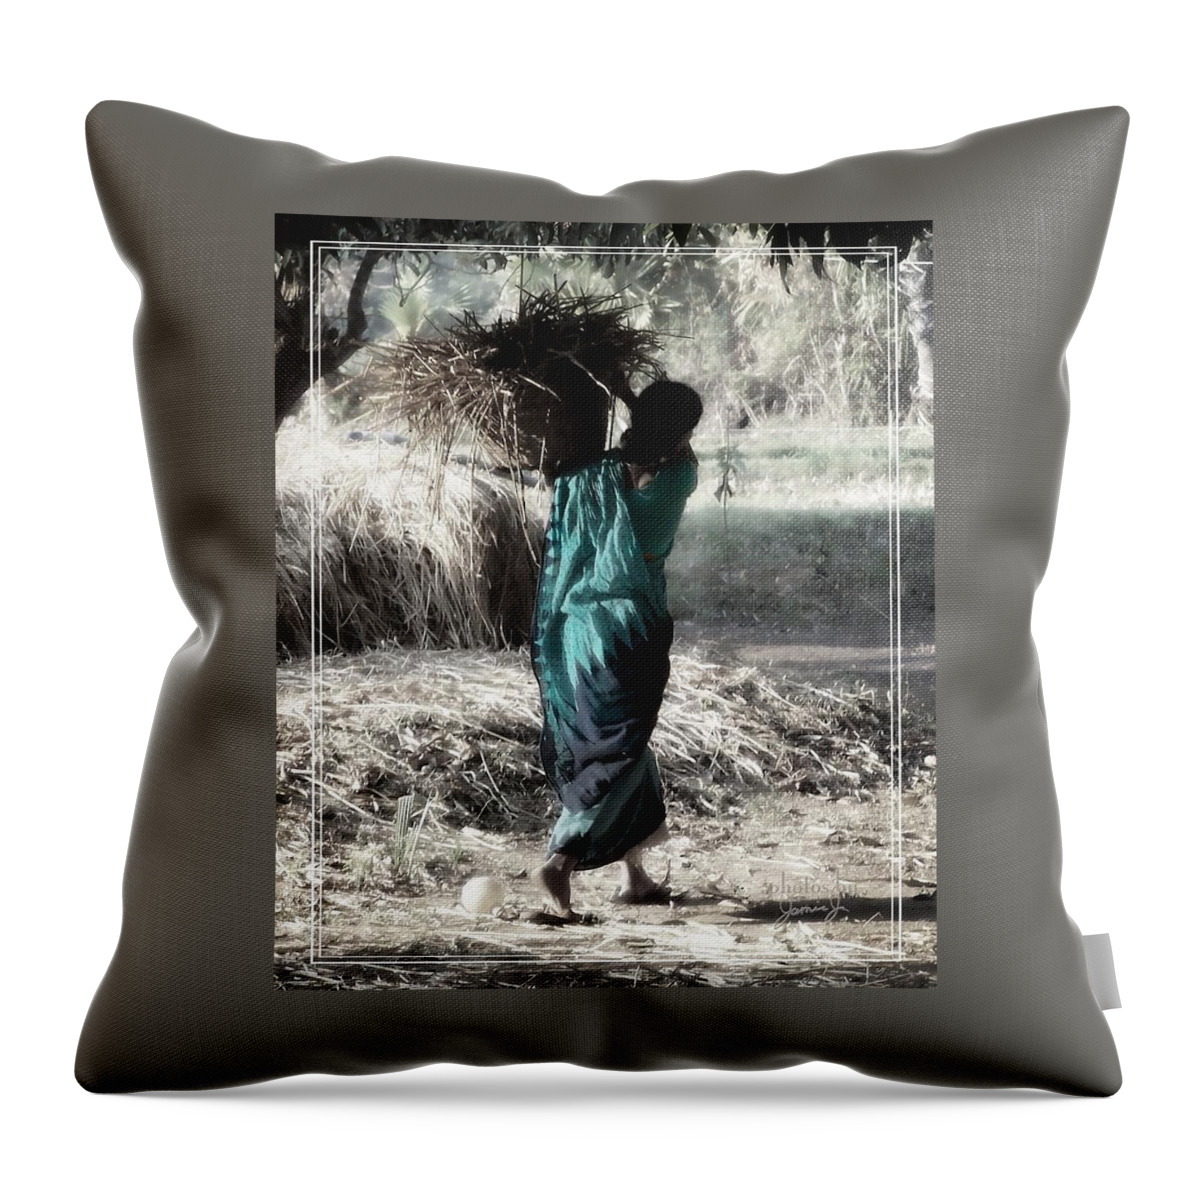 Turquiose Throw Pillow featuring the photograph Kumari by Jamie Johnson